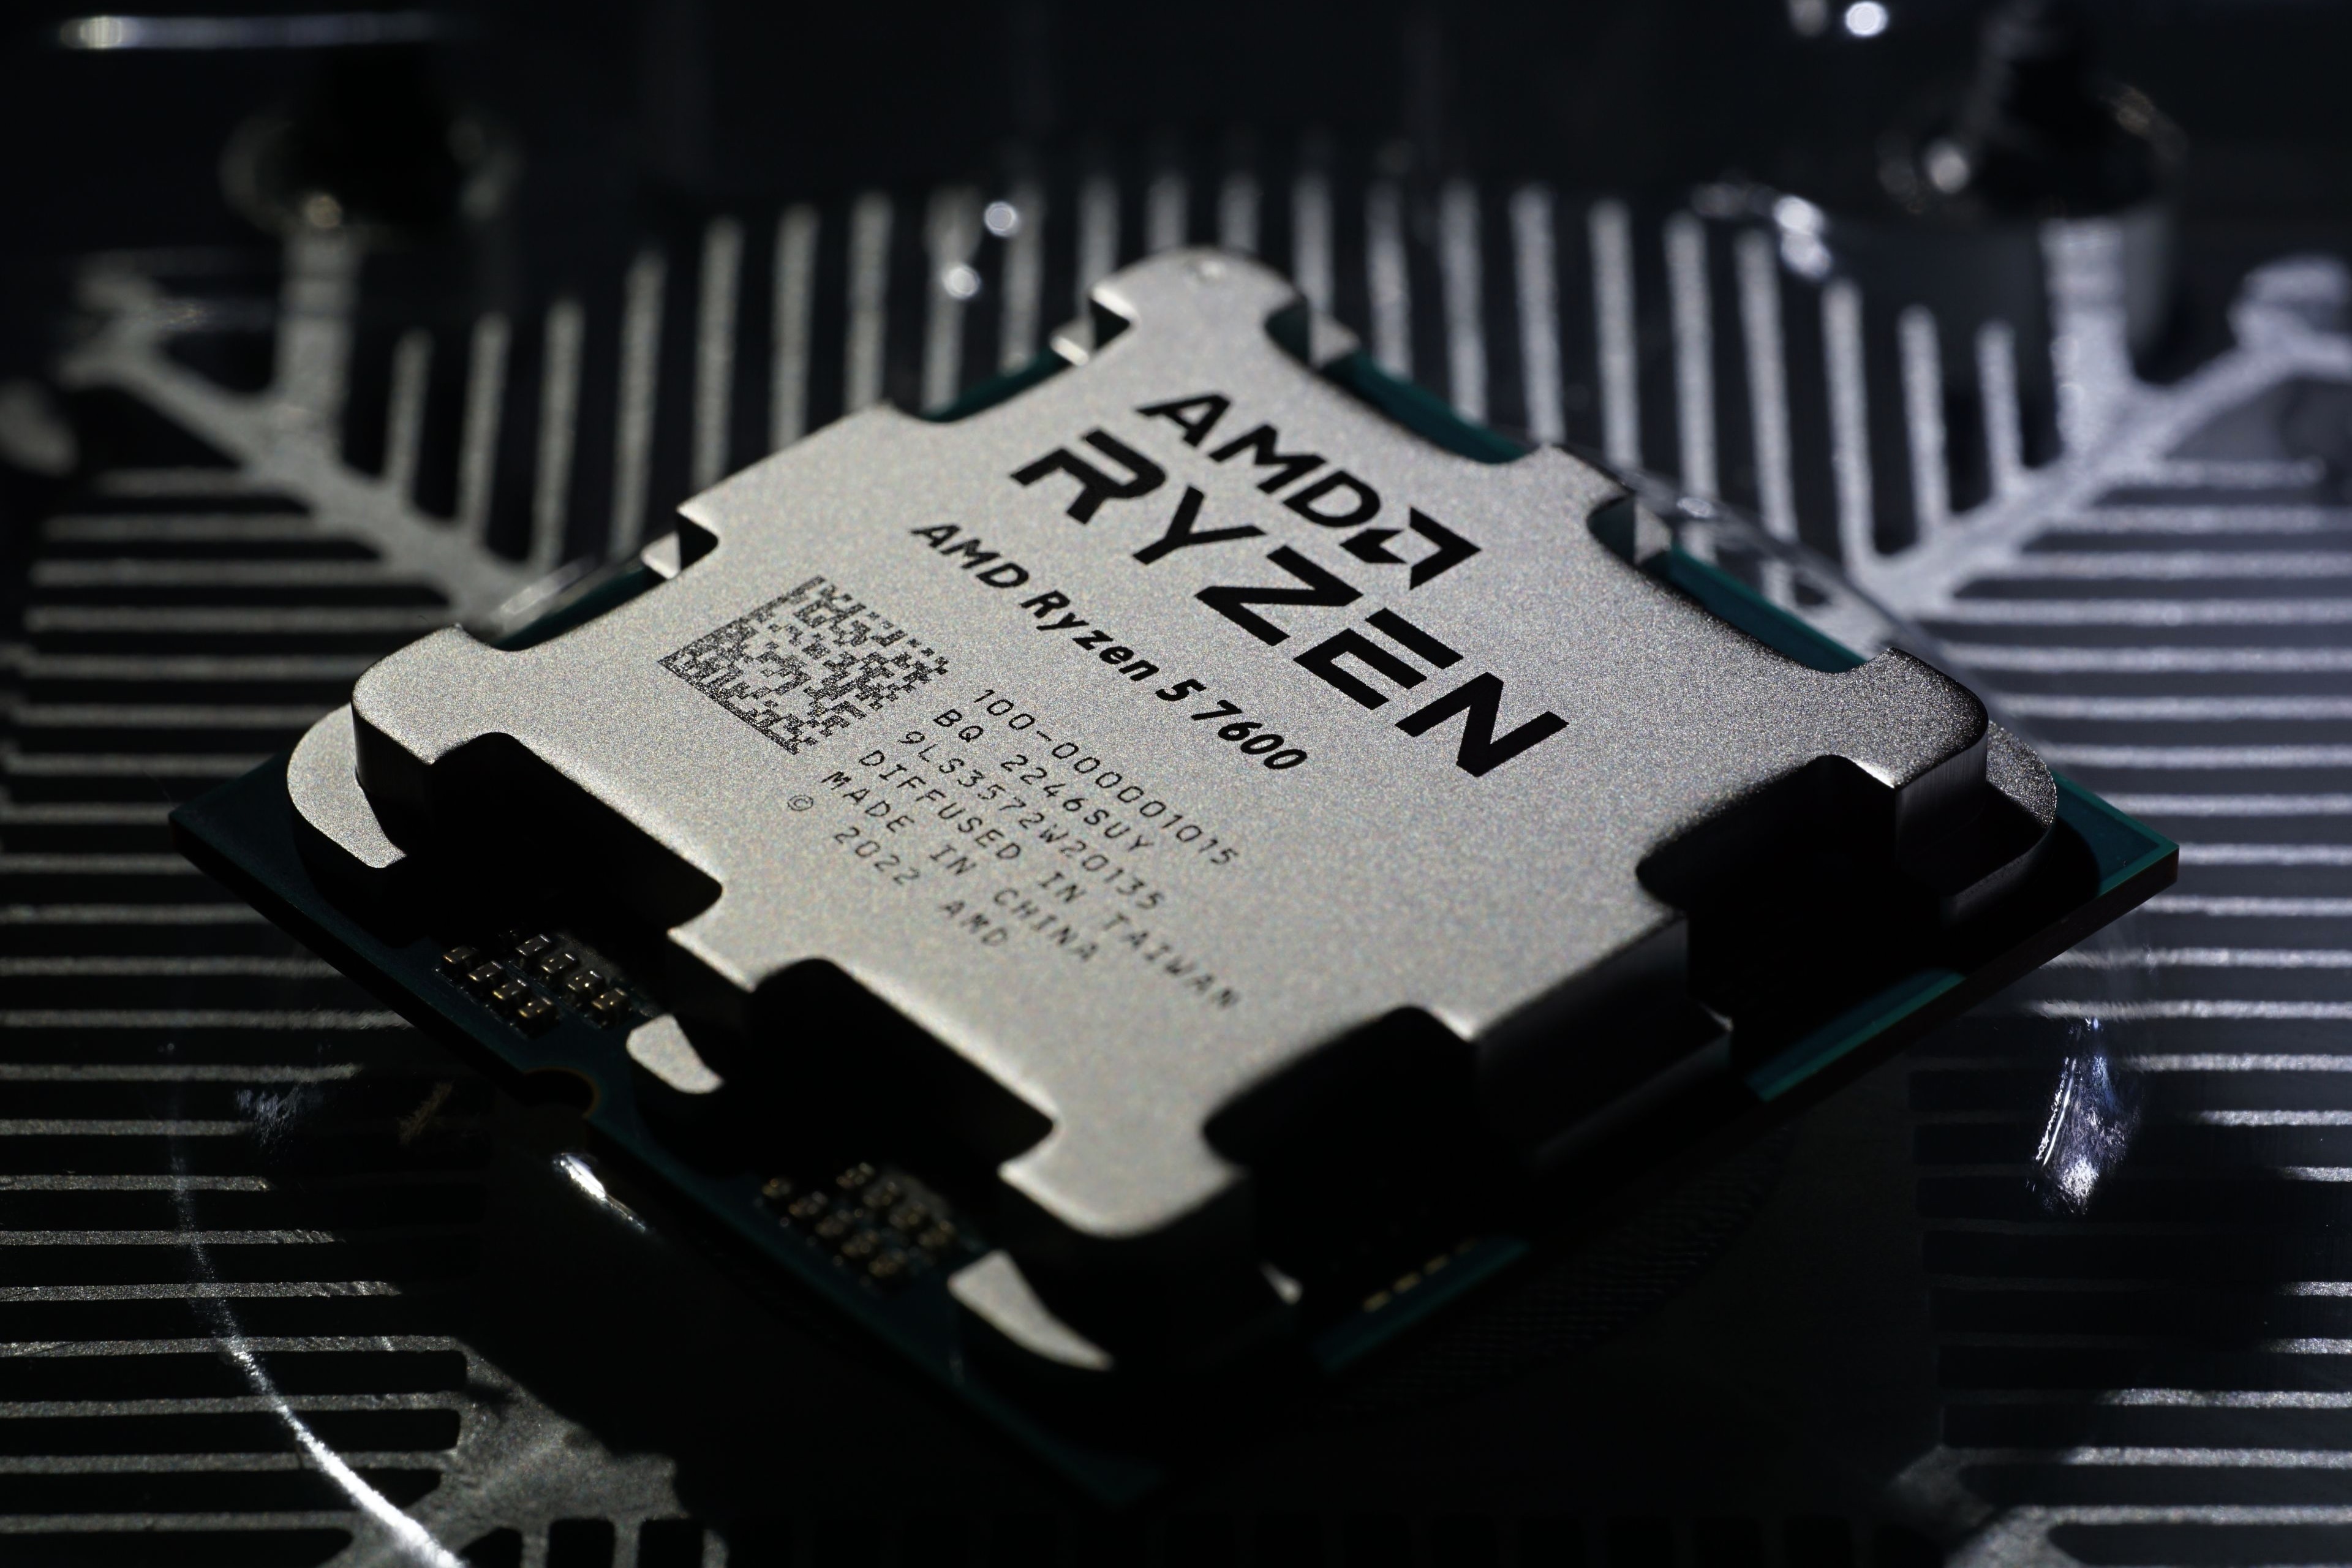 Ryzen 5 7600: Raphael in AMD's most popular series scores again